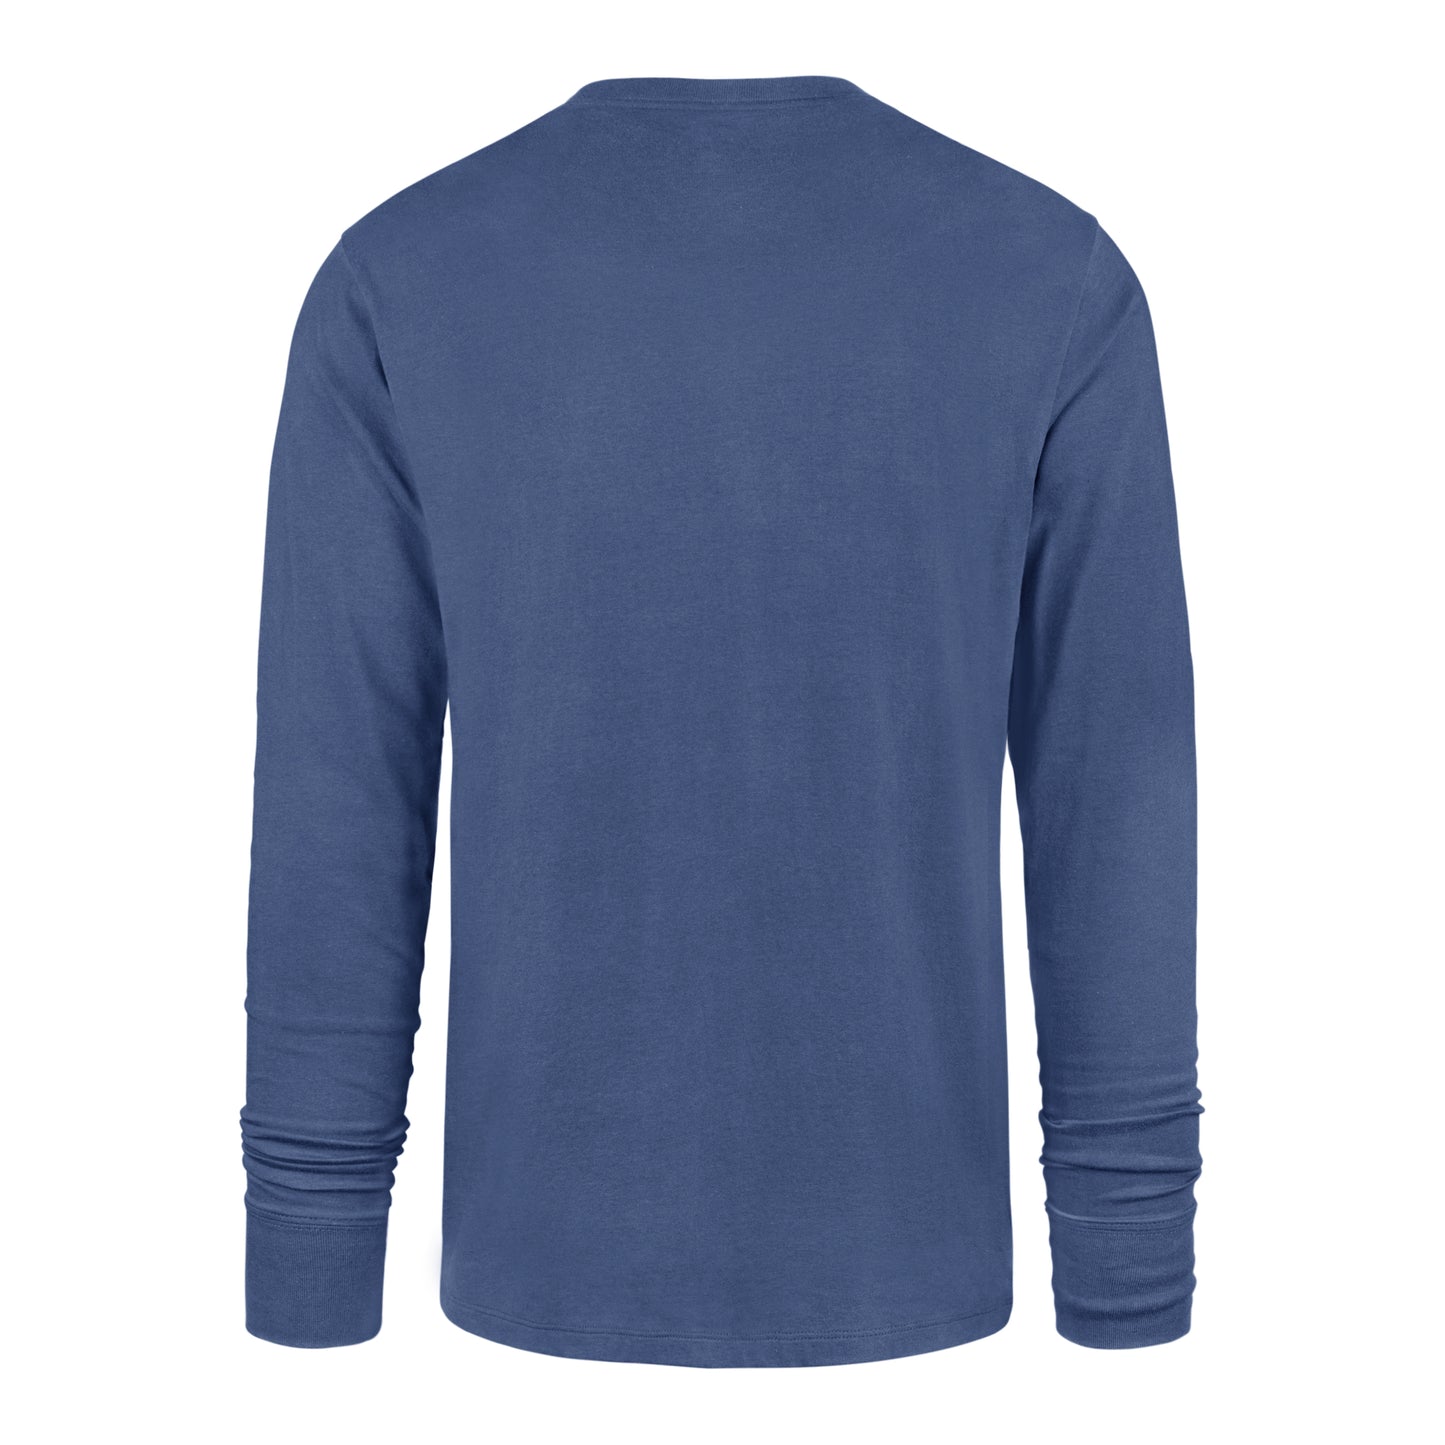 Chicago Cubs '47 Franklin Cadet Blue Four Logos Long Sleeve T-Shirt